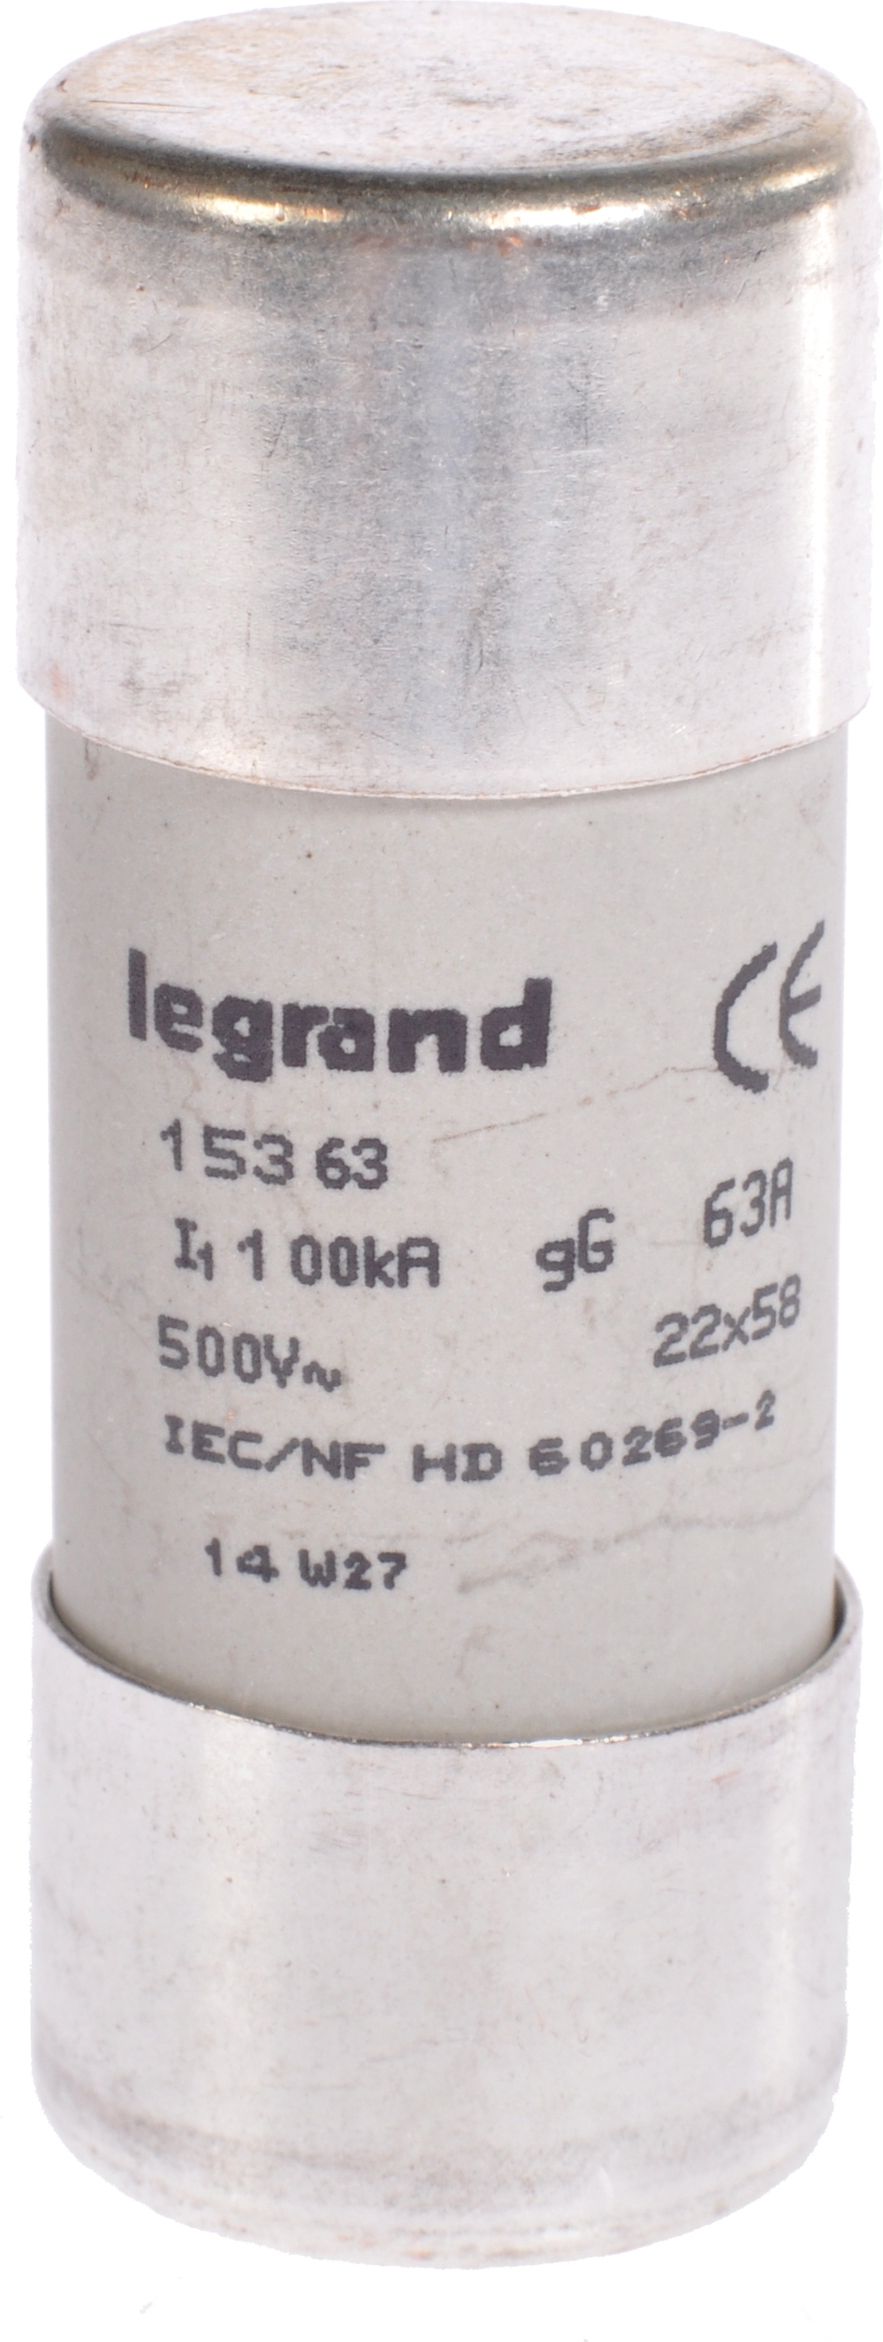 Siguranțe cilindrice 63A gL 500V HPC 22 x 58mm (015363)